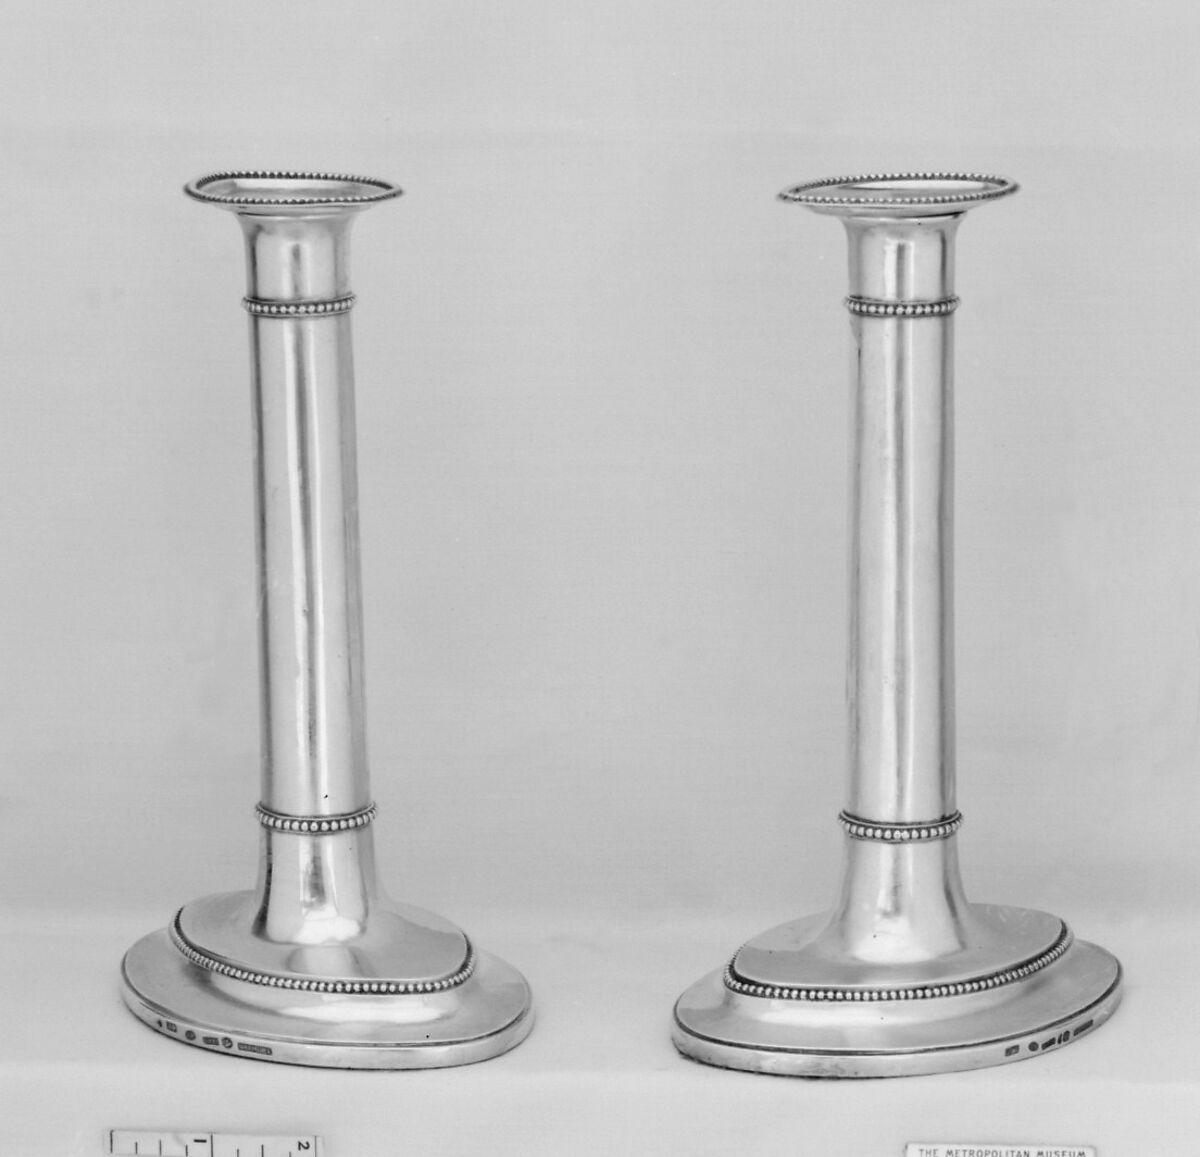 Candlesticks (one of a pair), B. N., Silver, Dutch, Amsterdam 